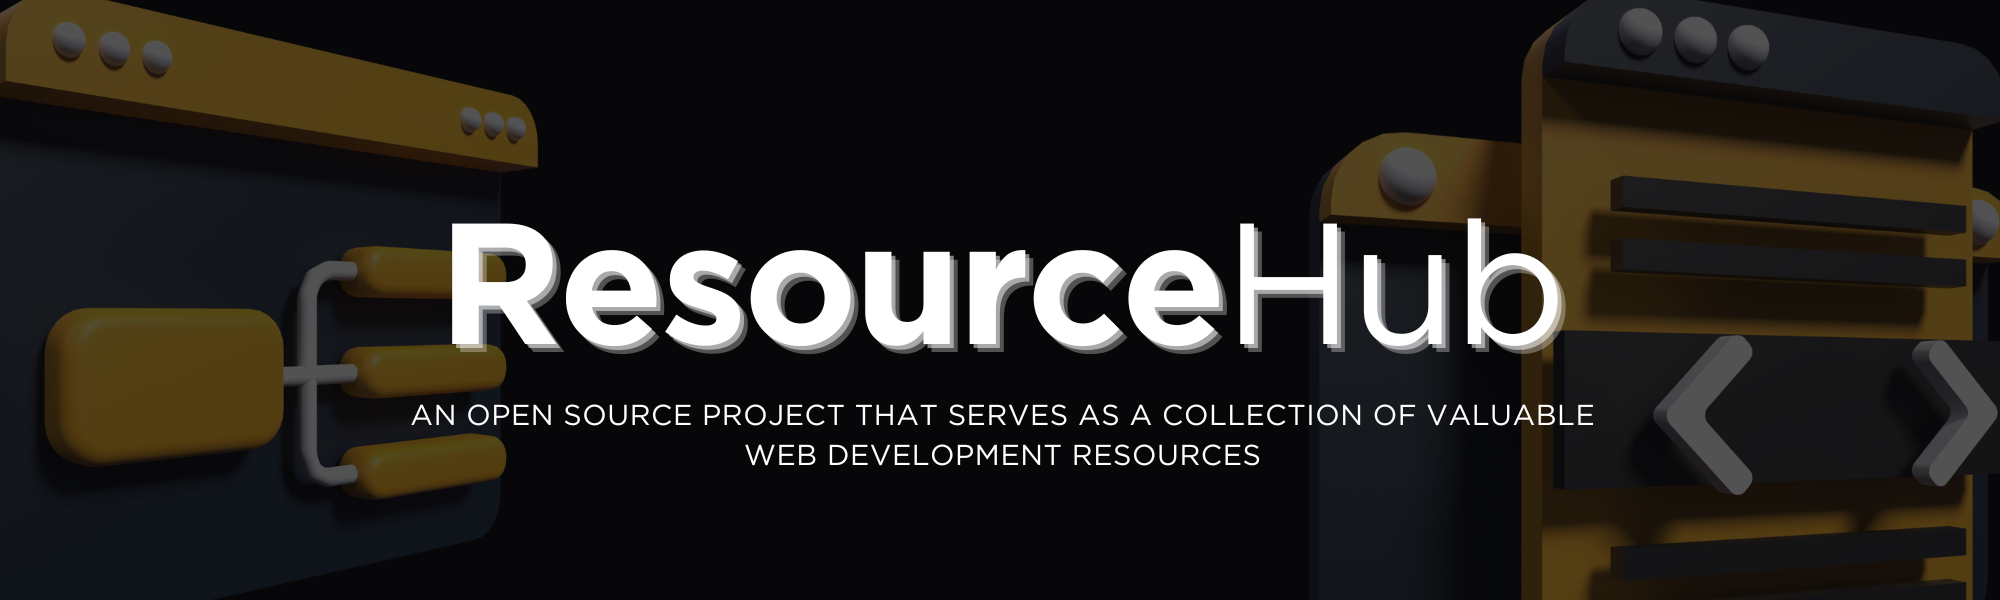 ResourceHub Banner